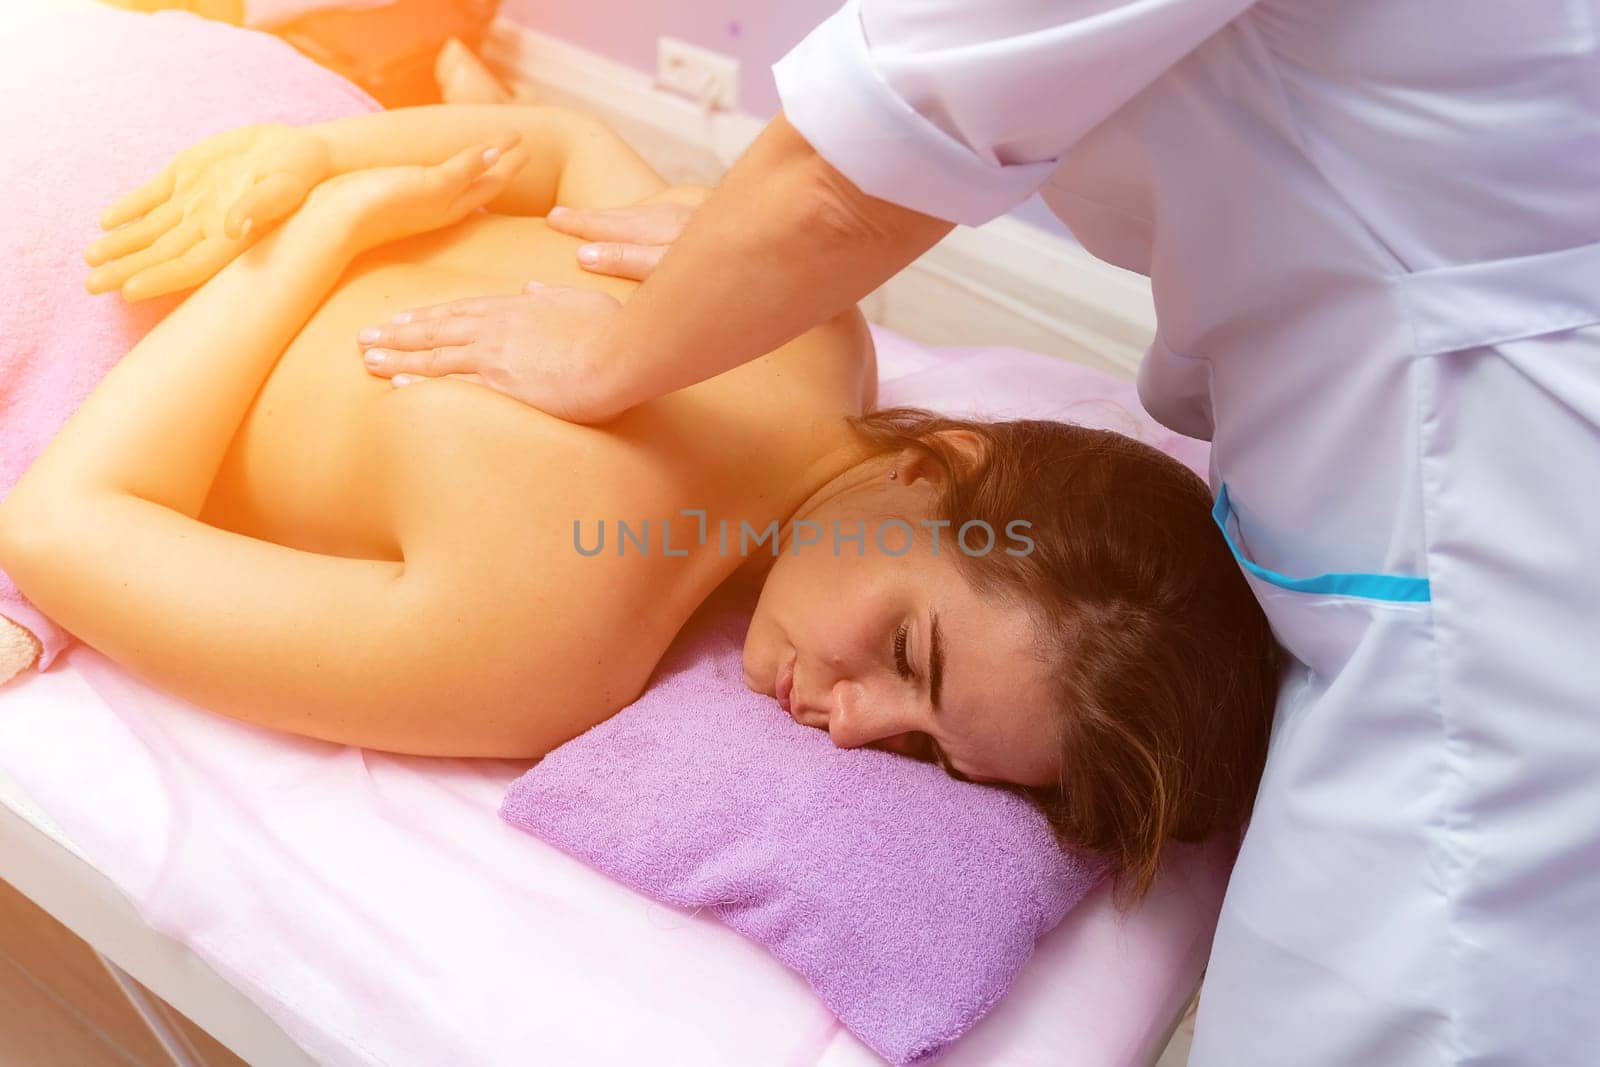 Blonde massage therapist massaging a woman. Woman getting a massage at the spa by Matiunina